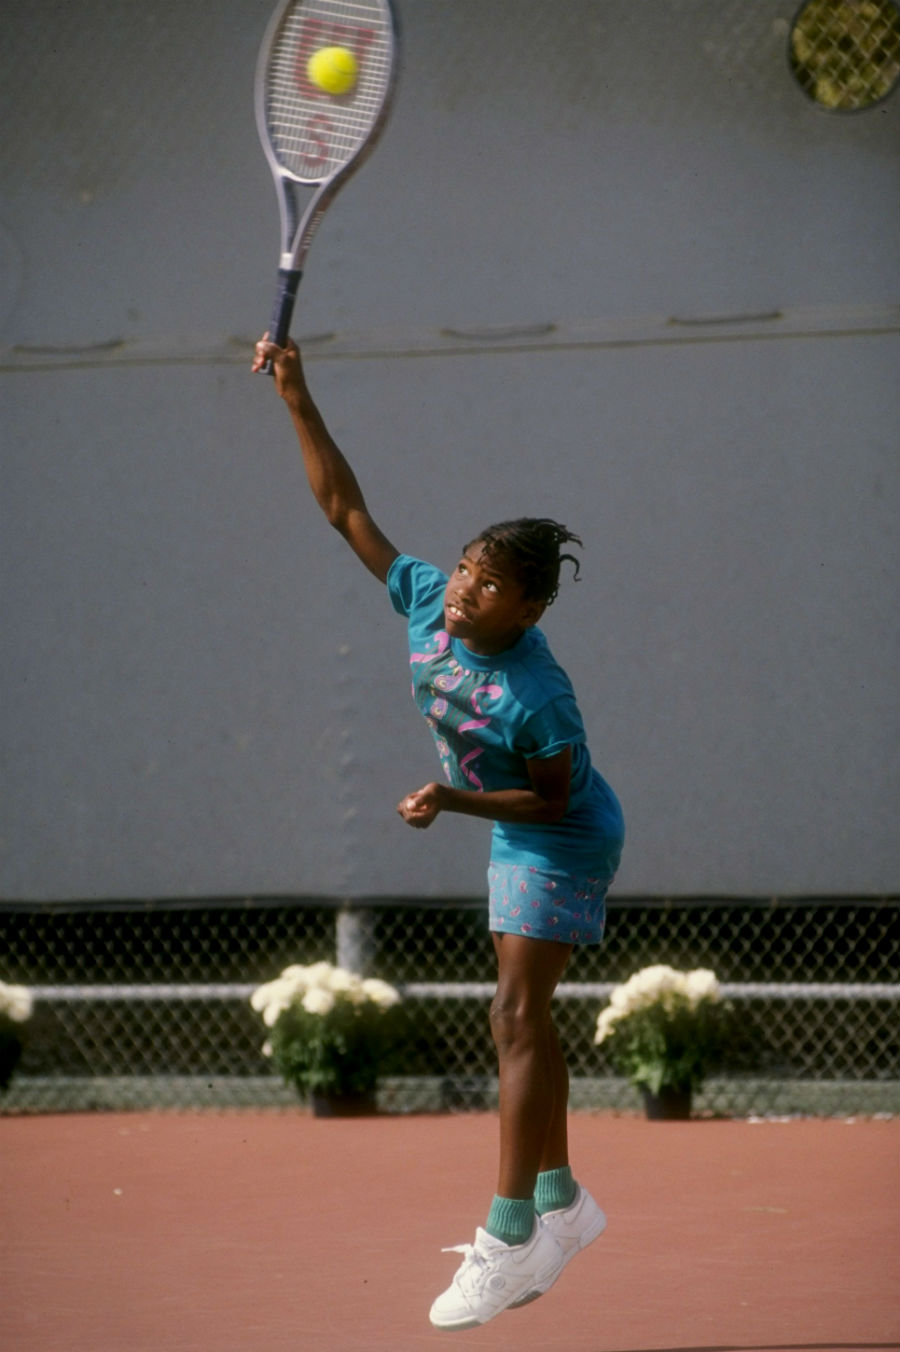 A young Serena Williams plays a shot